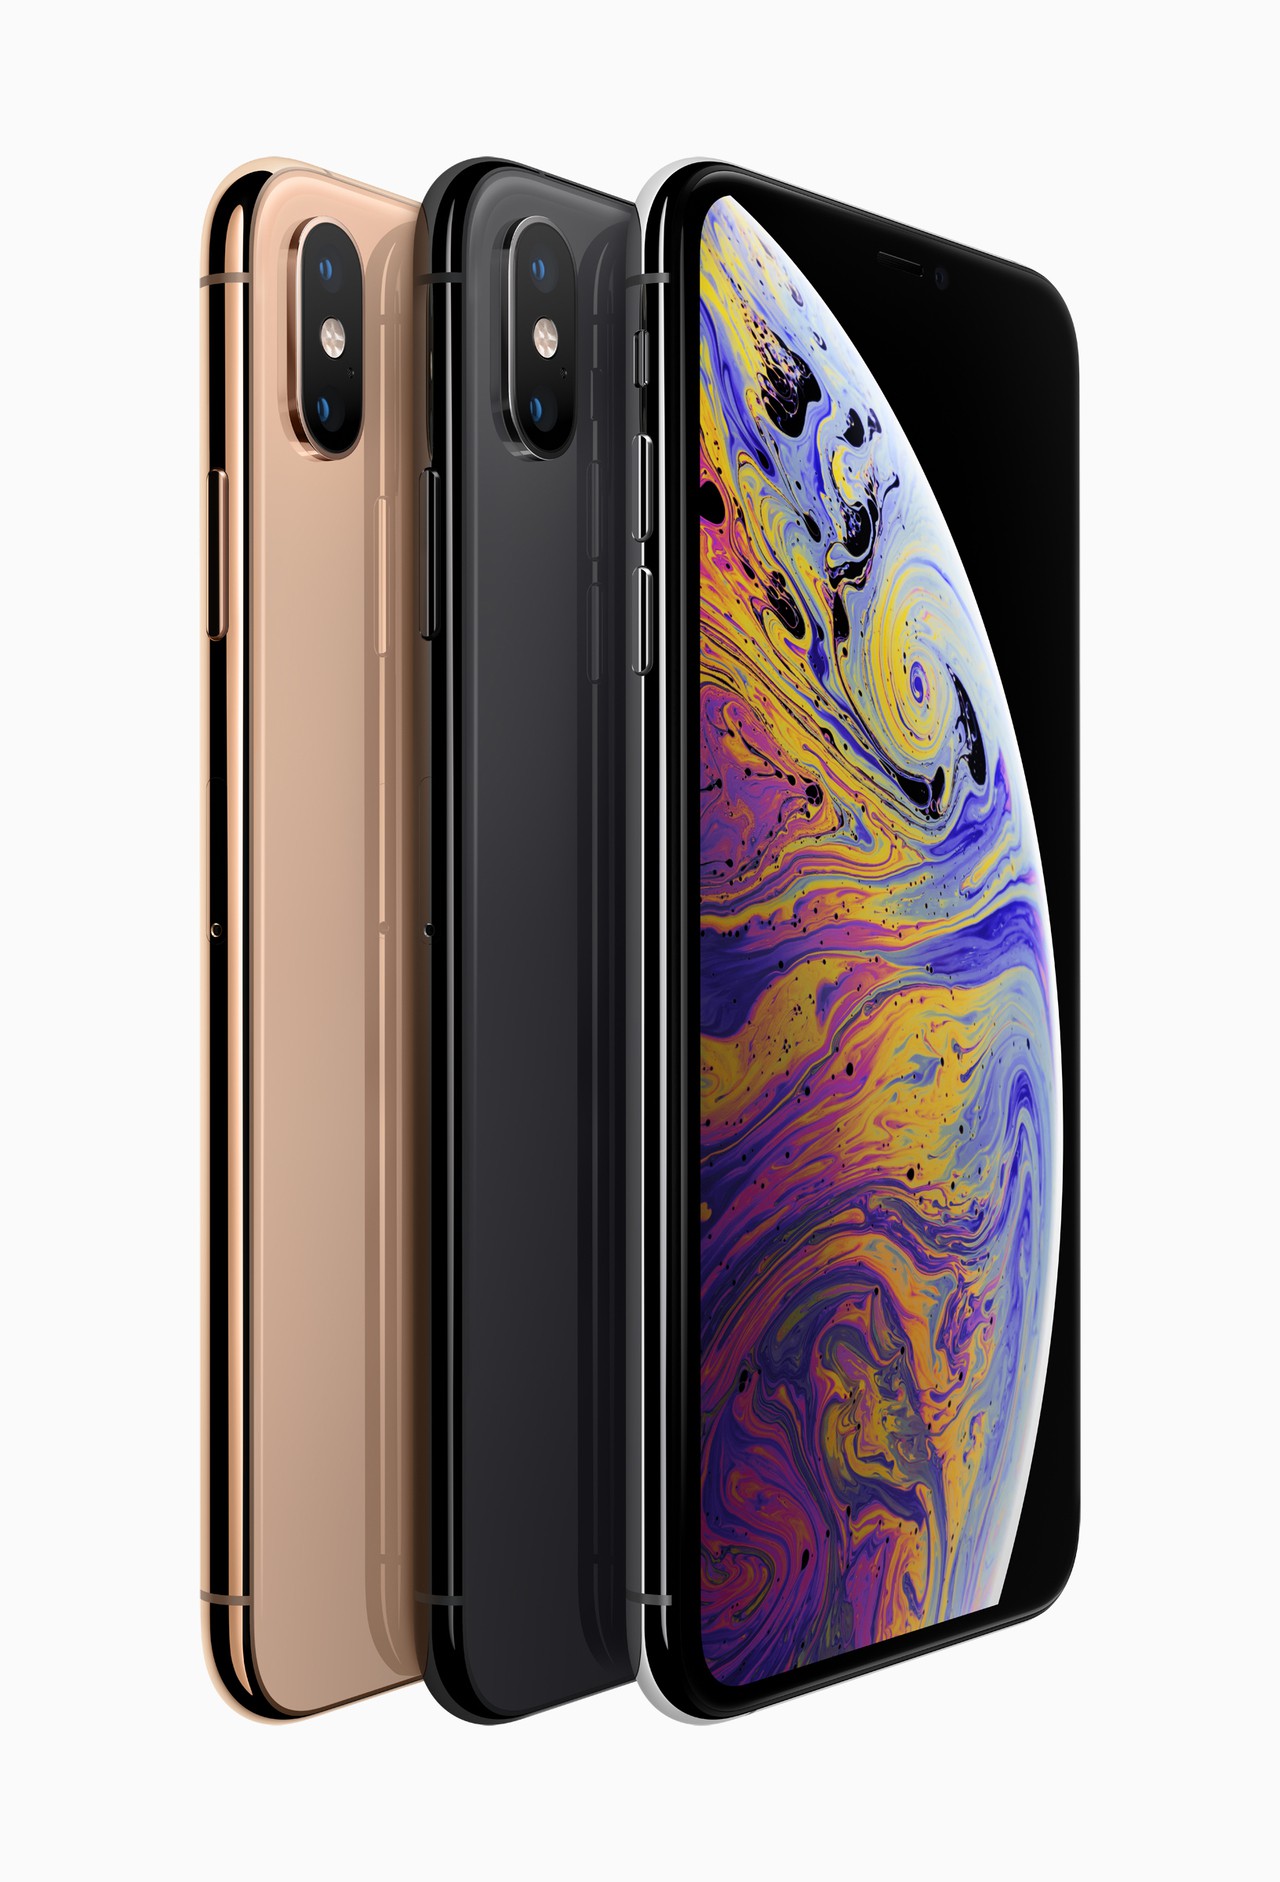 Apple iPhone Xs line up 09122018